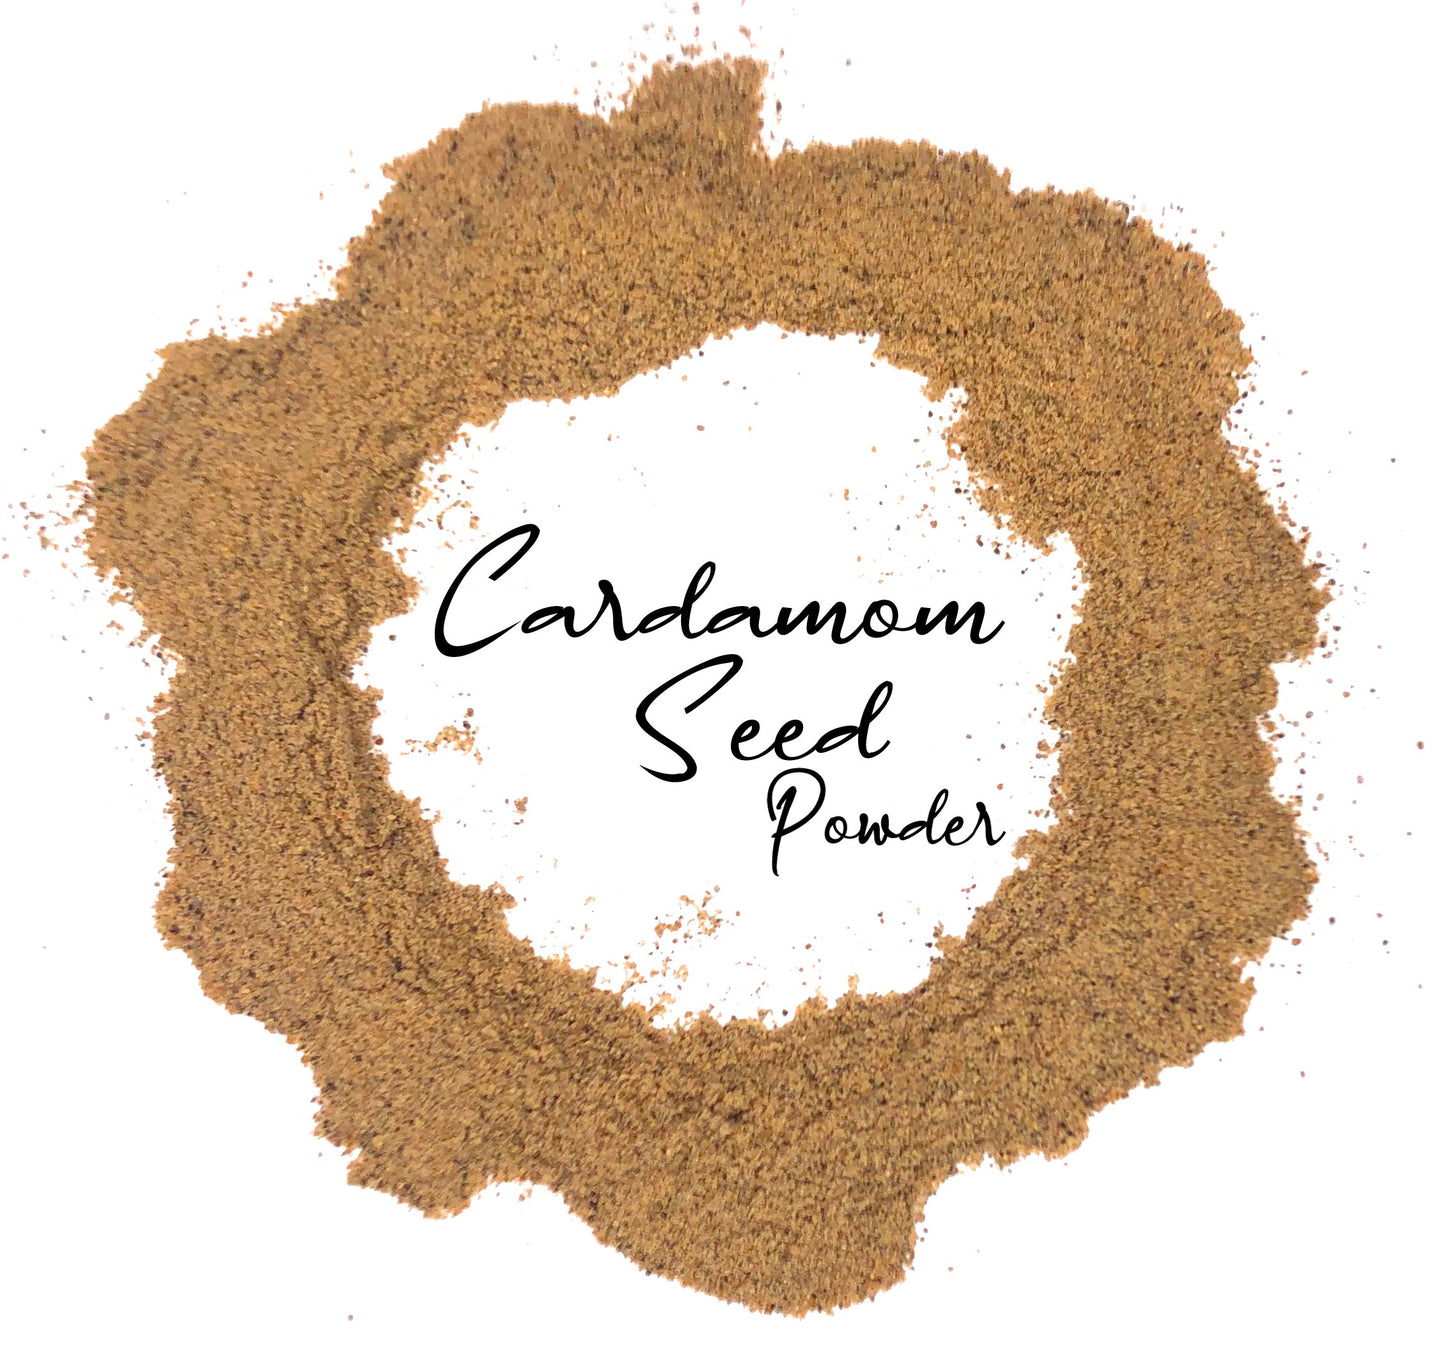 Wholesale Spices & Herbs - Cardamom Seed Powder, Organic 1lb (454g) Bag